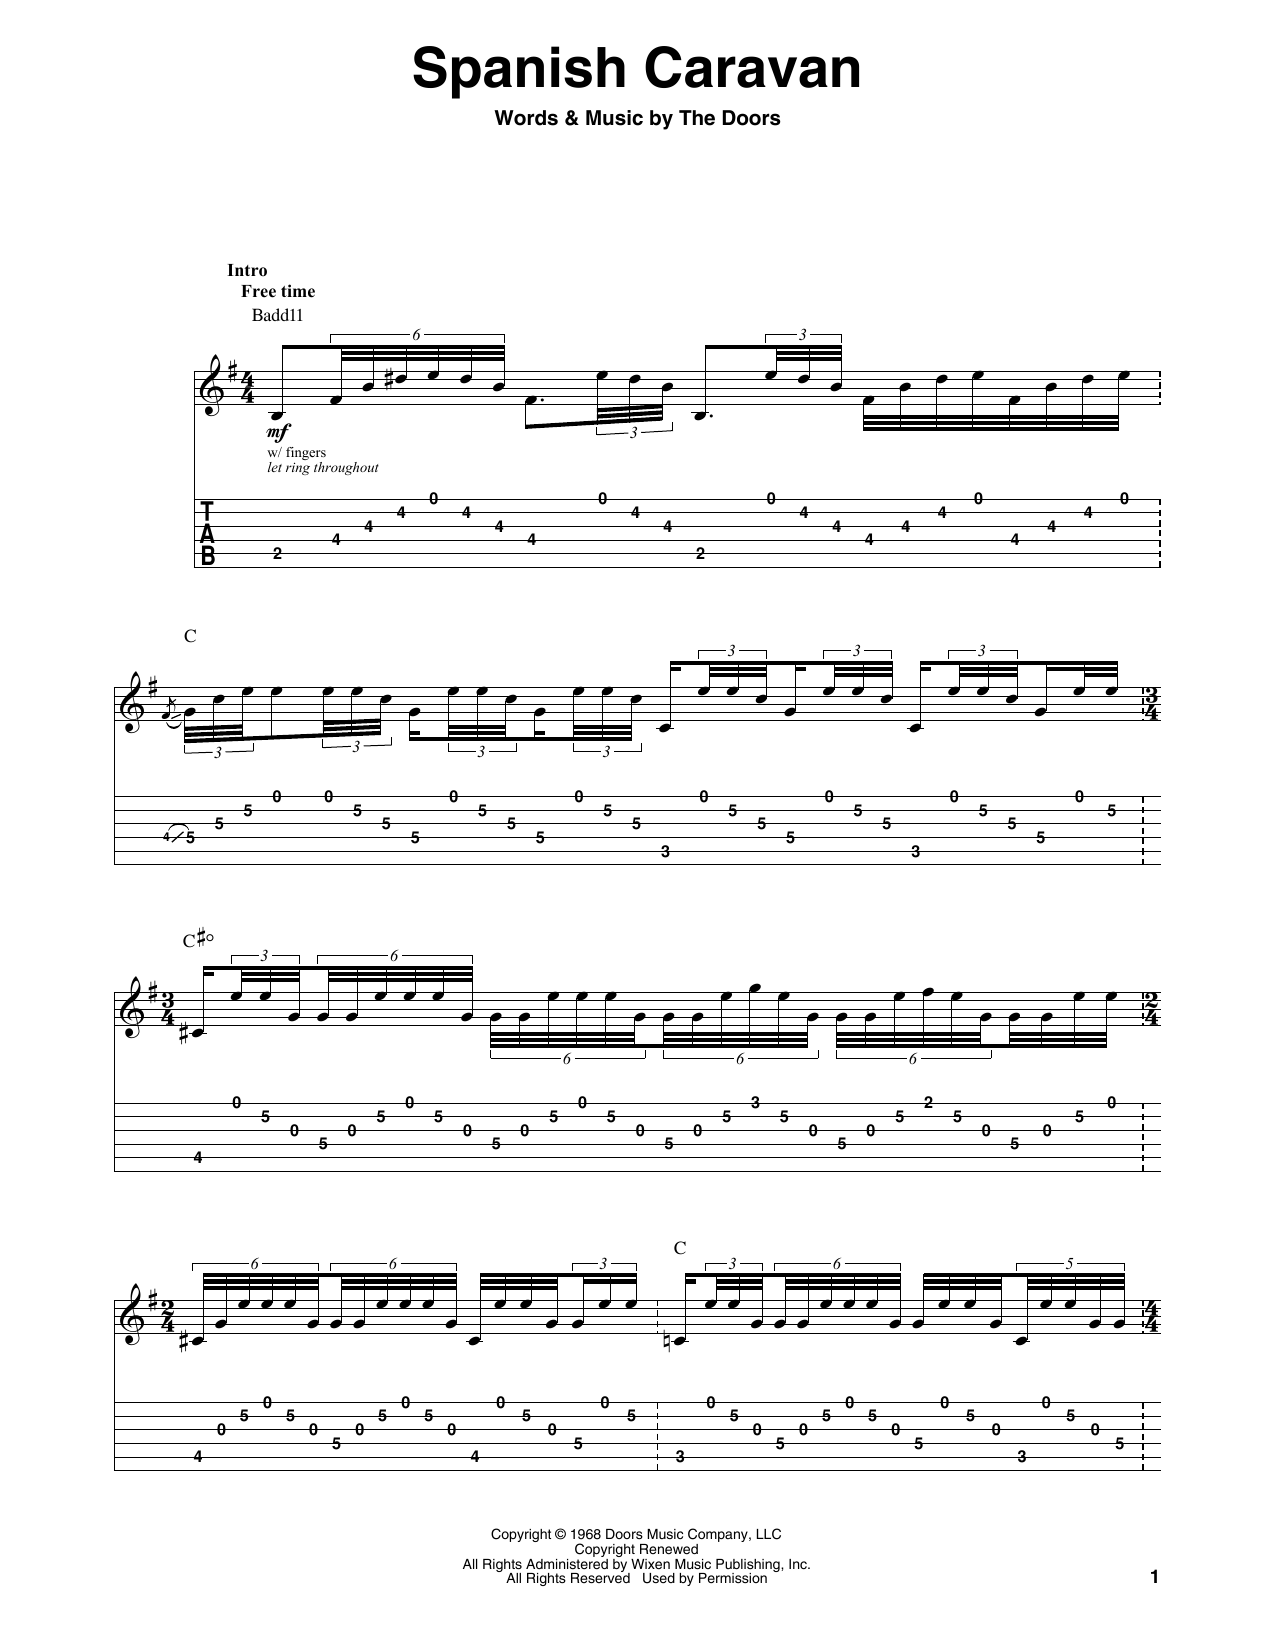 The Doors Spanish Caravan Sheet Music Notes & Chords for Guitar Tab - Download or Print PDF